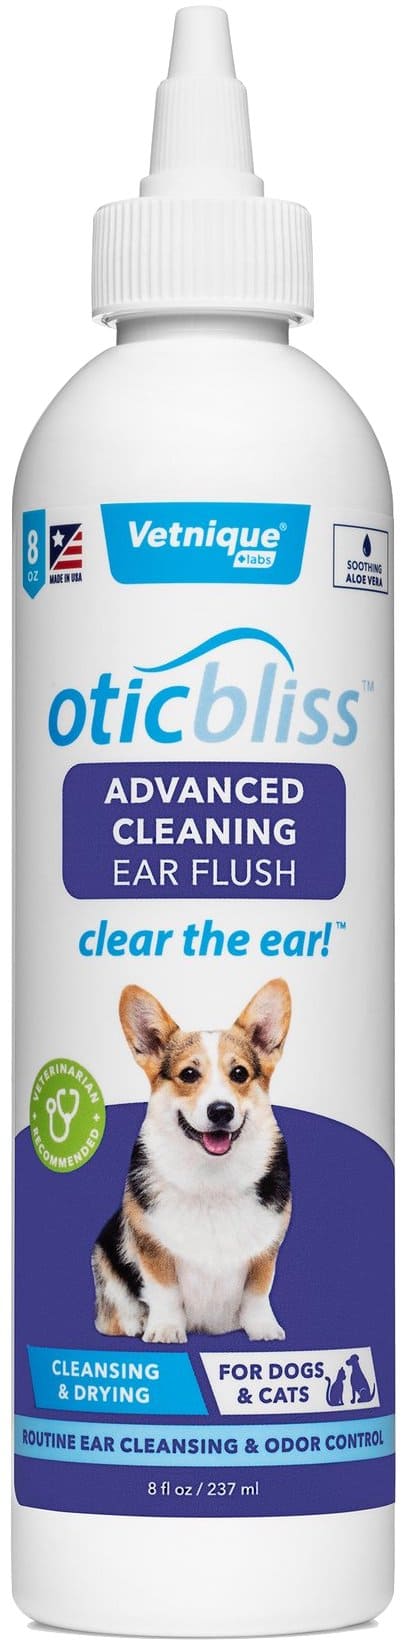 Oticbliss Advanced Cleaning Ear Flush 8 oz 1